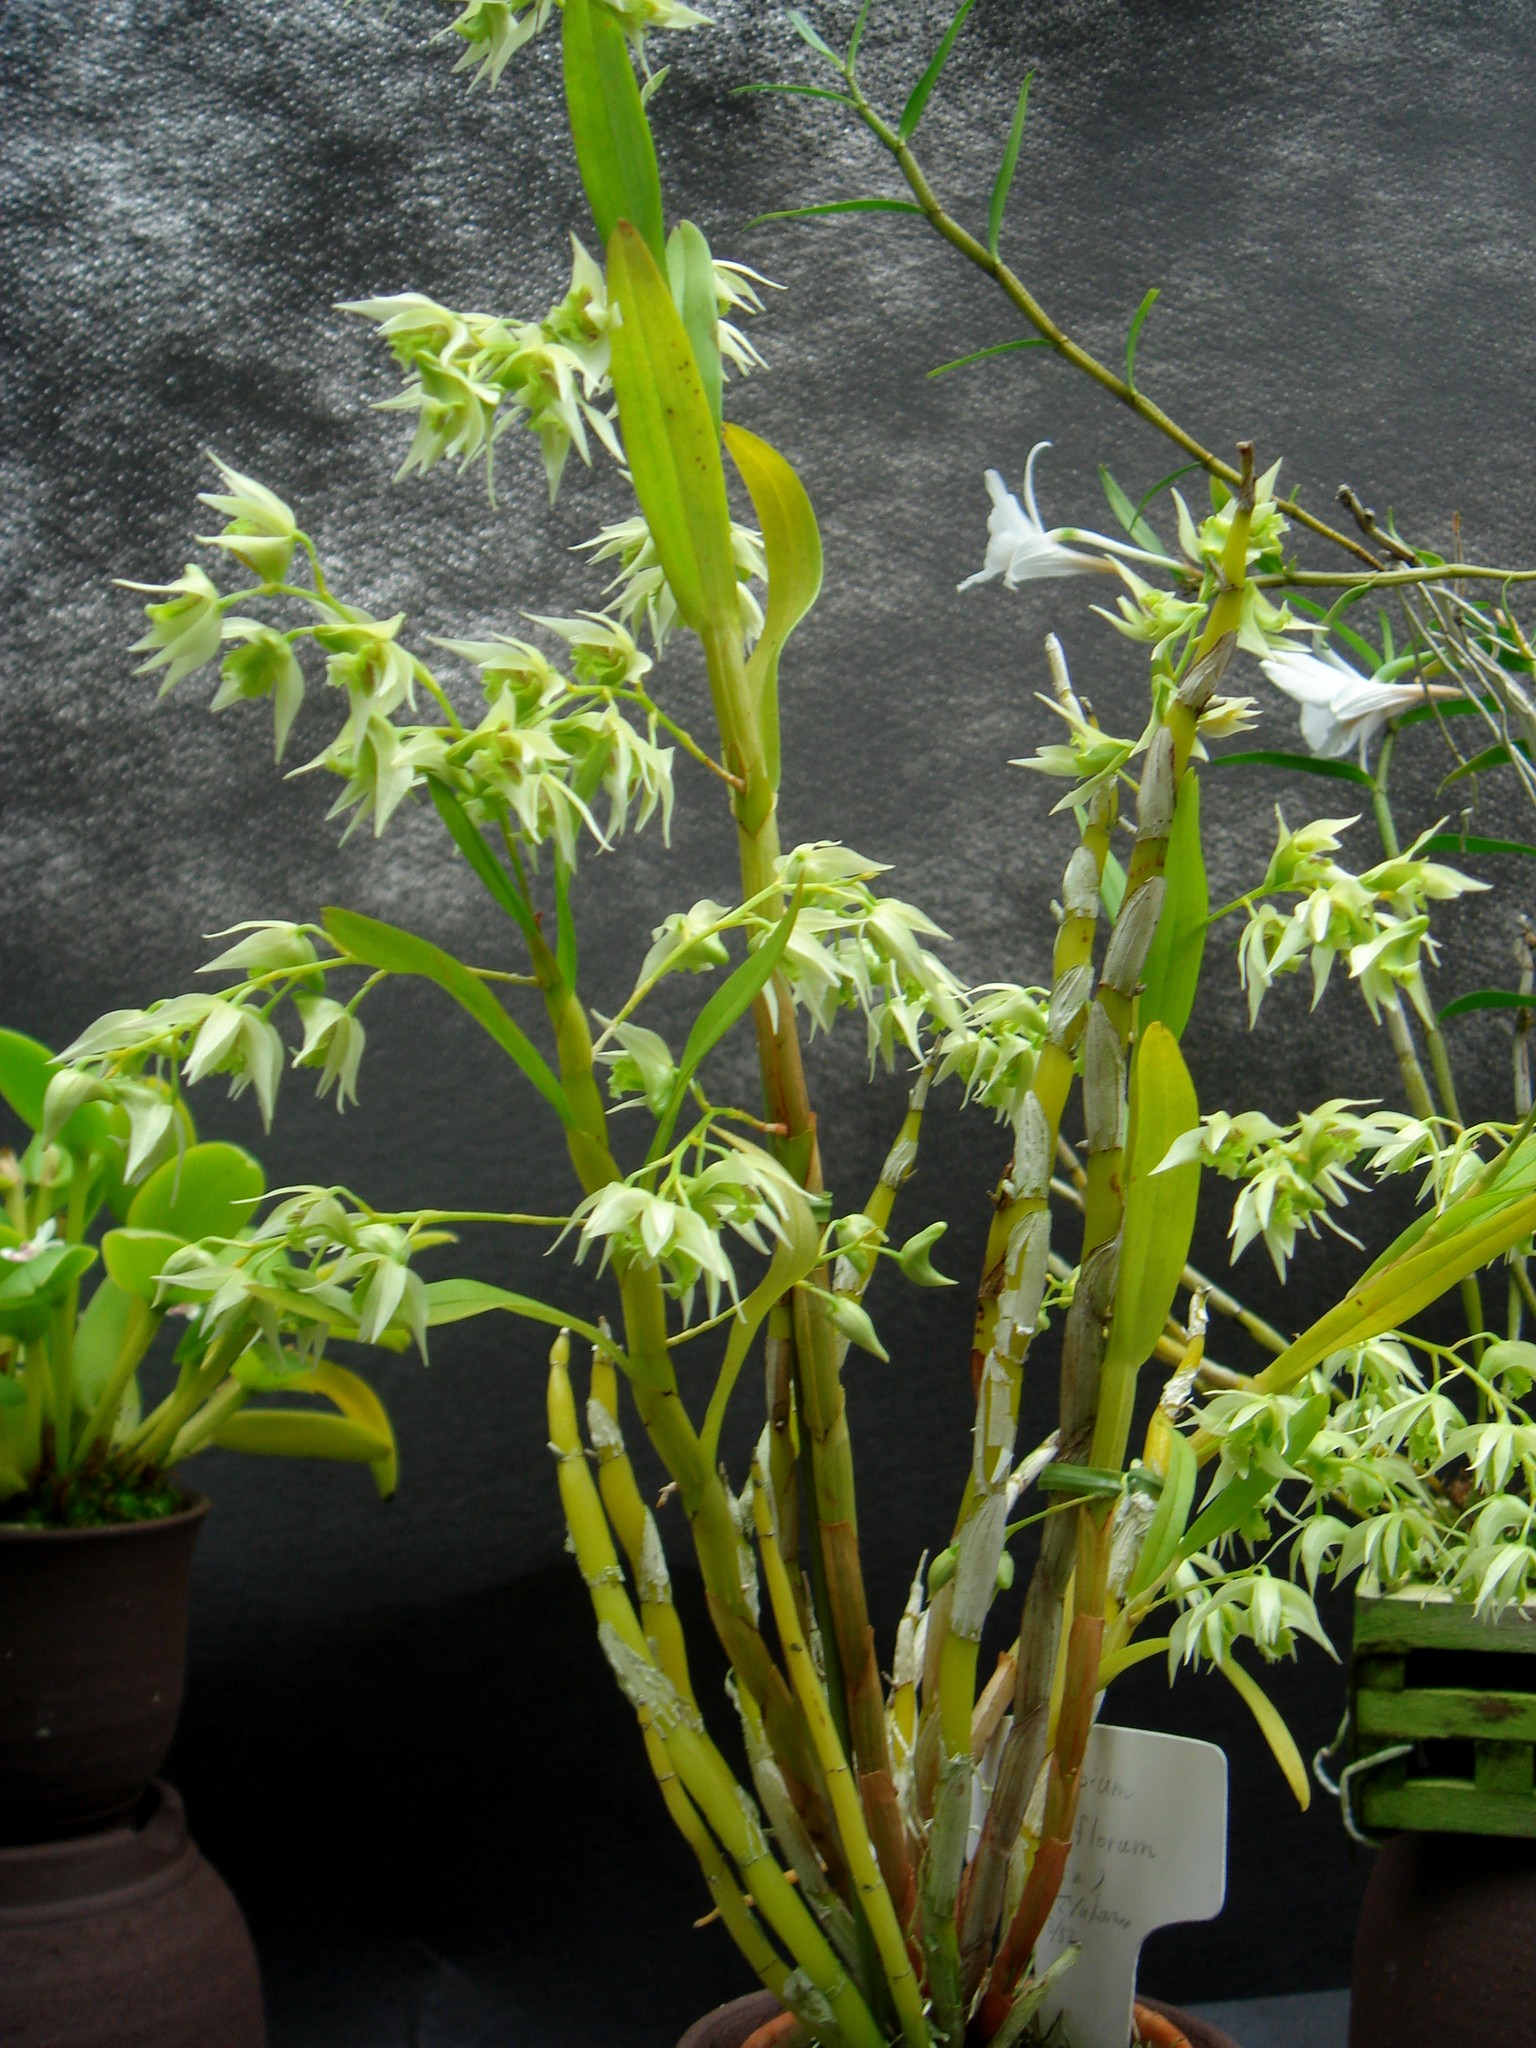 http://orchids.la.coocan.jp/Dendrobium/Dendrobium%20eriiflorum/DSC00951.JPG